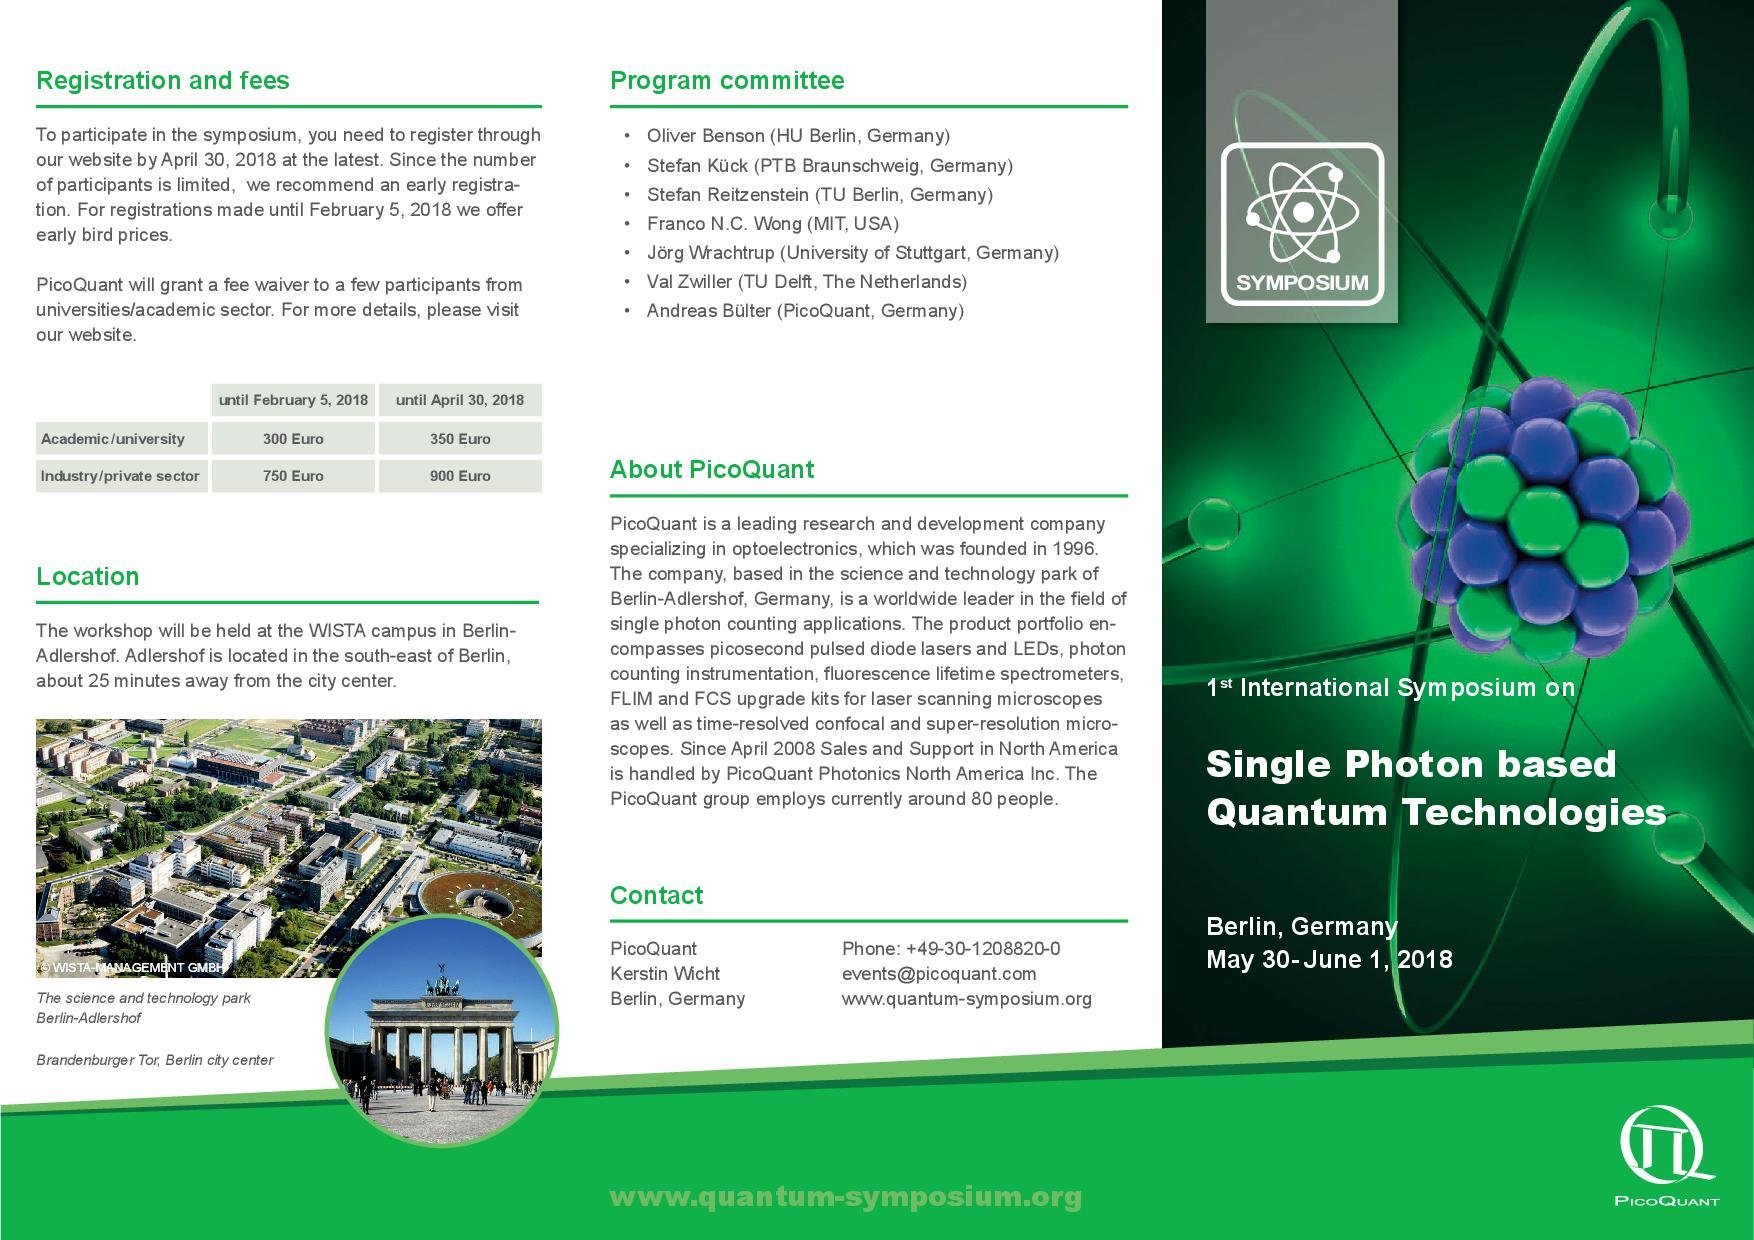 1st International Symposium on Single Photon based Quantum Technologies - 